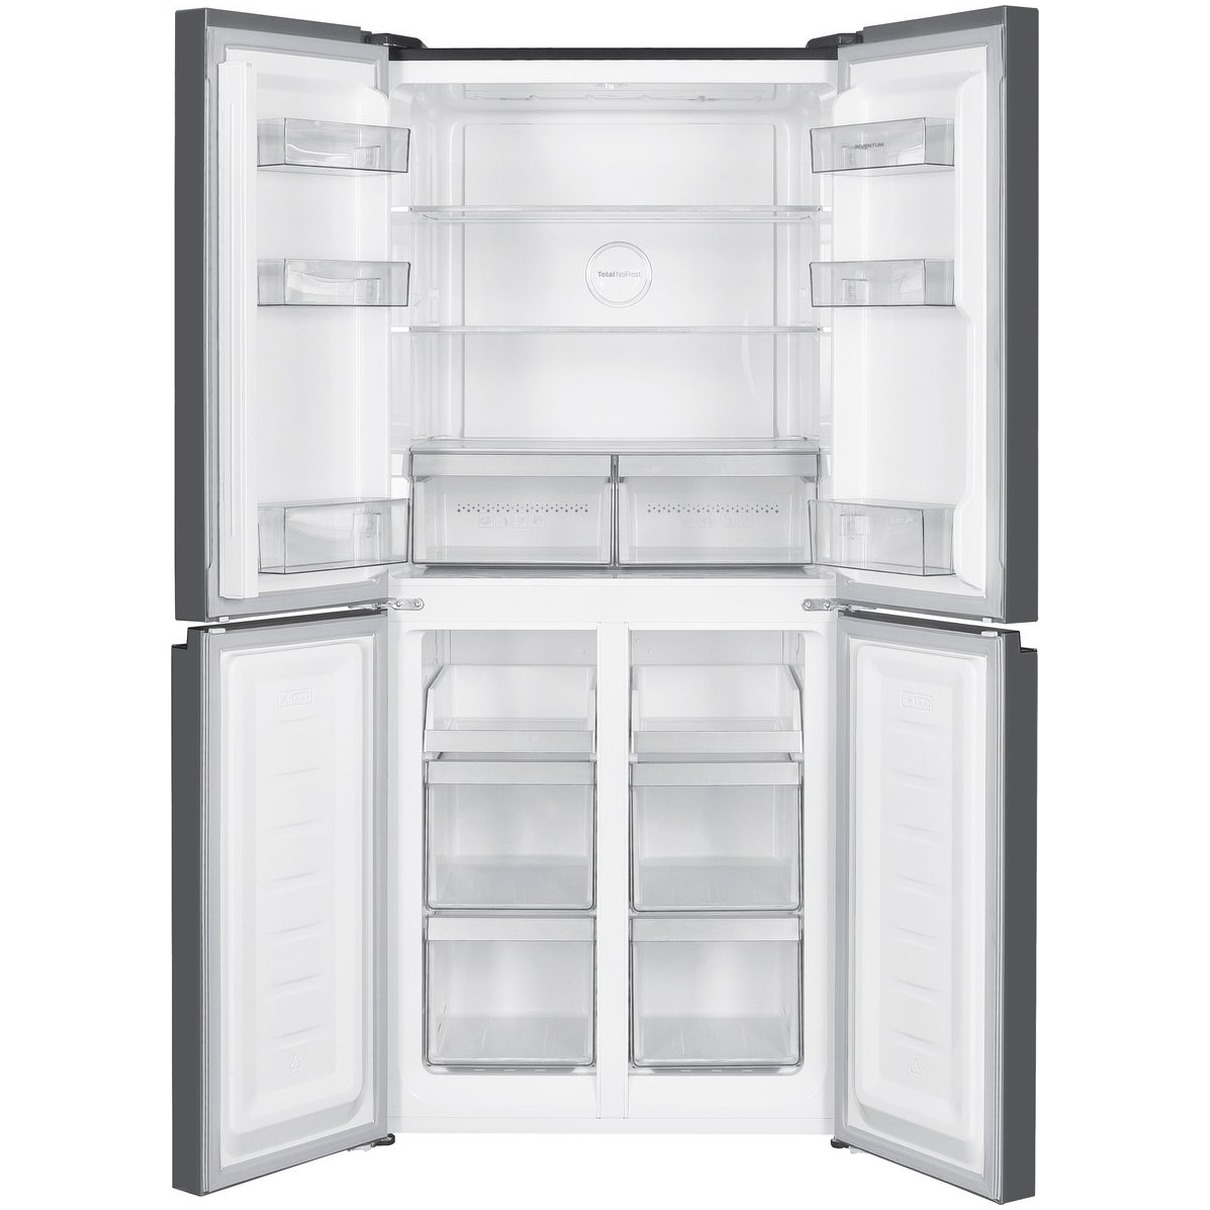 Inventum SKV4180B - Amerikaanse koelkast - 4 deuren - Display - No Frost - Supervriezen - 466 liter - Zwart RVS